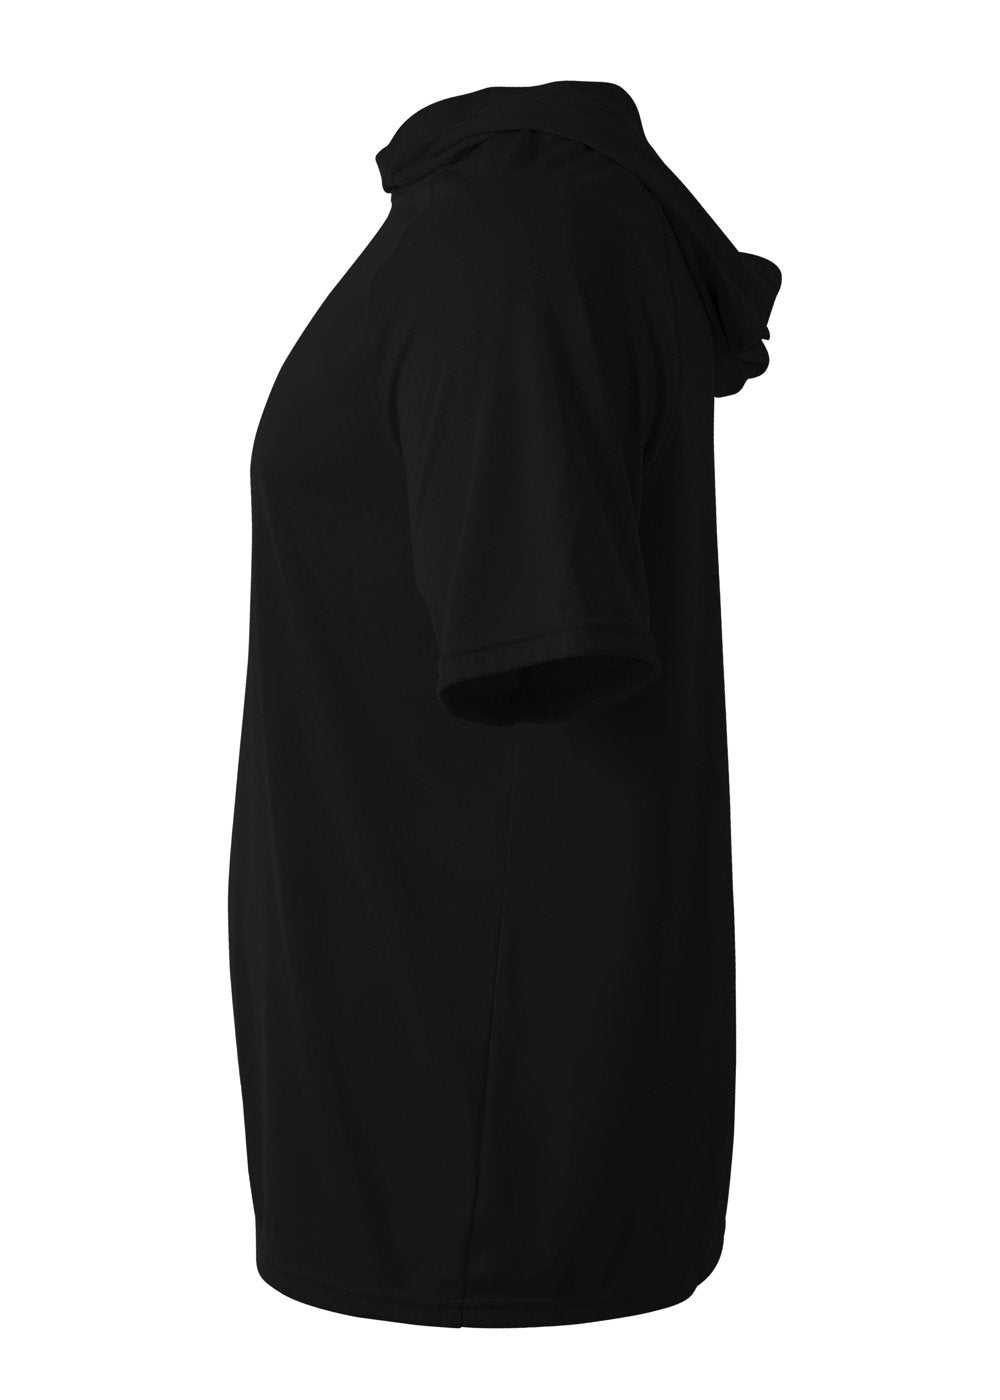 A4 N3408 Short Sleeve Hooded Tee - Black - HIT a Double